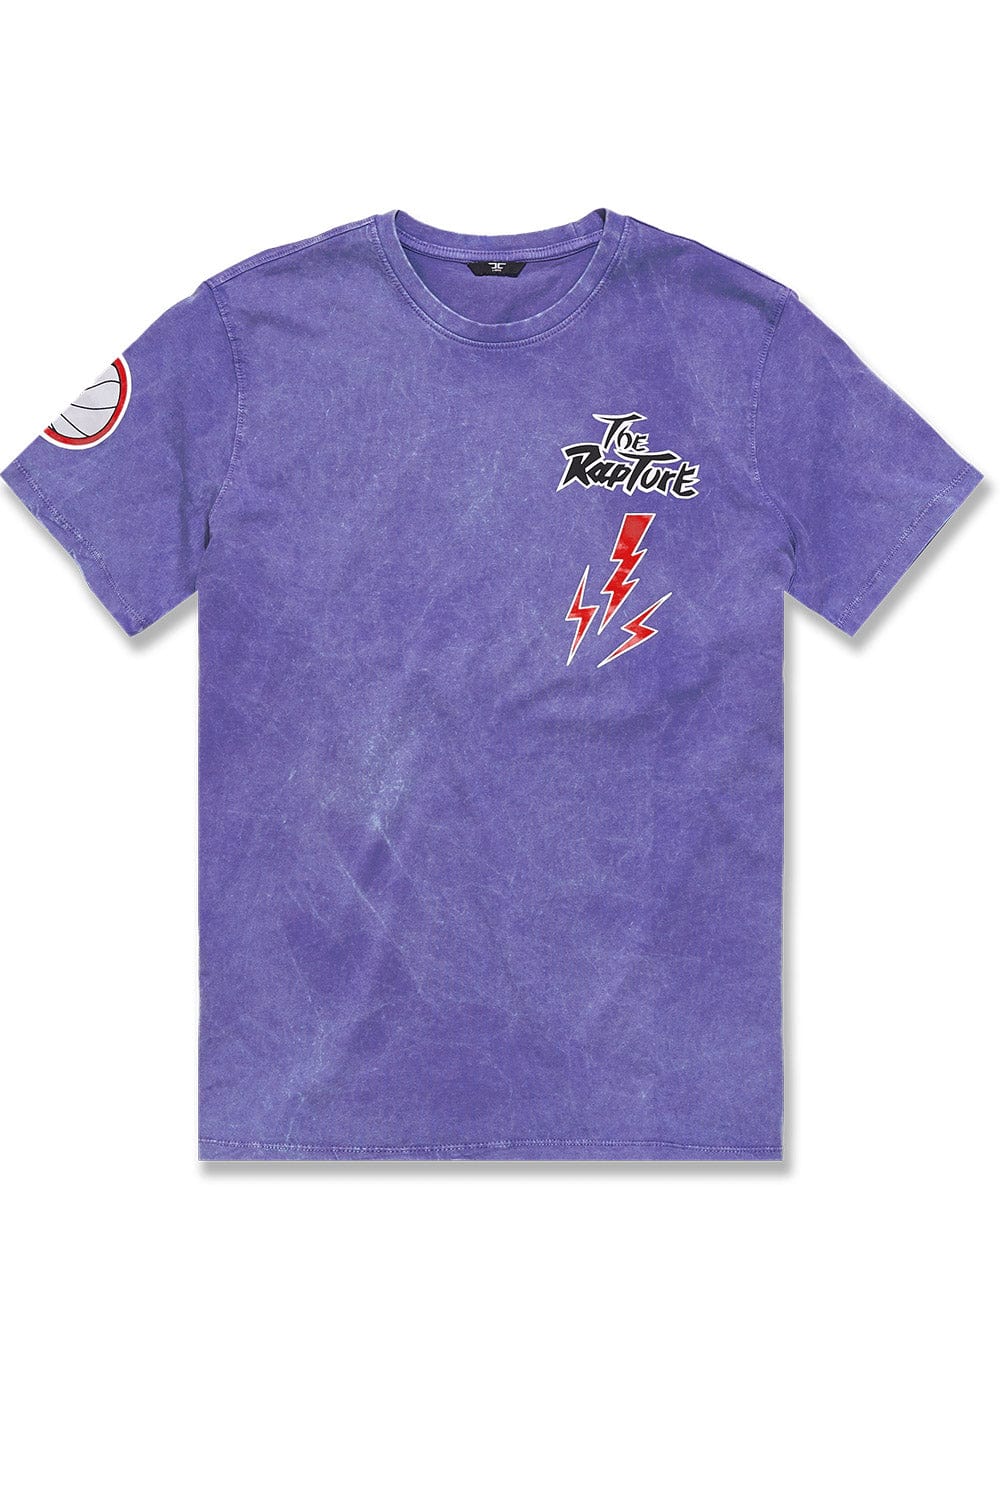 Jordan Craig The Rapture T-Shirt (Purple) S / Purple